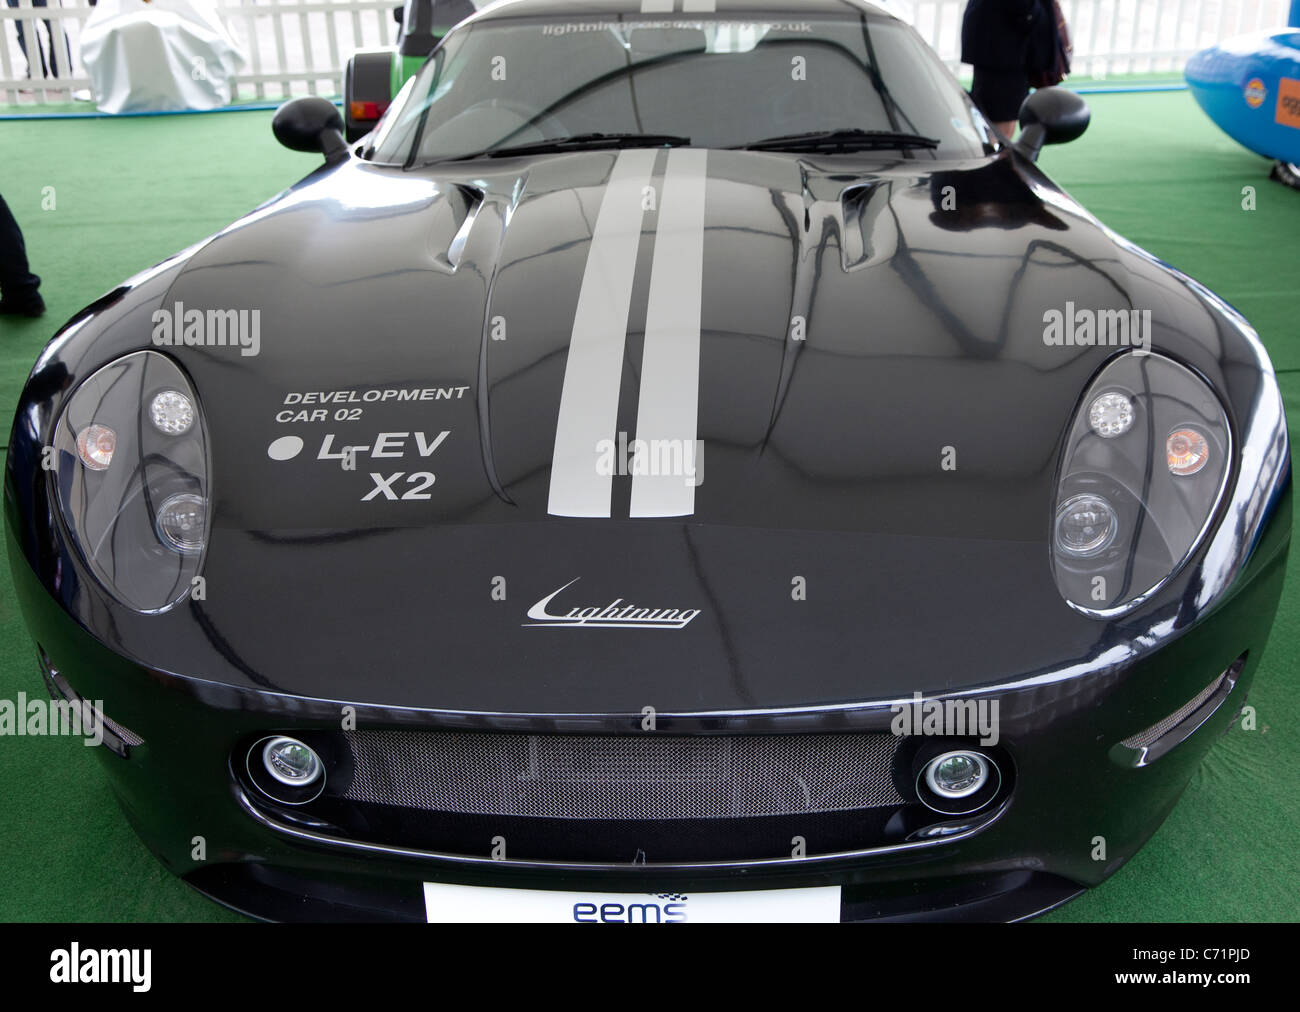 Ecovelocity motor festival London - Lightning GT electric supercar Development Car 02 Stock Photo